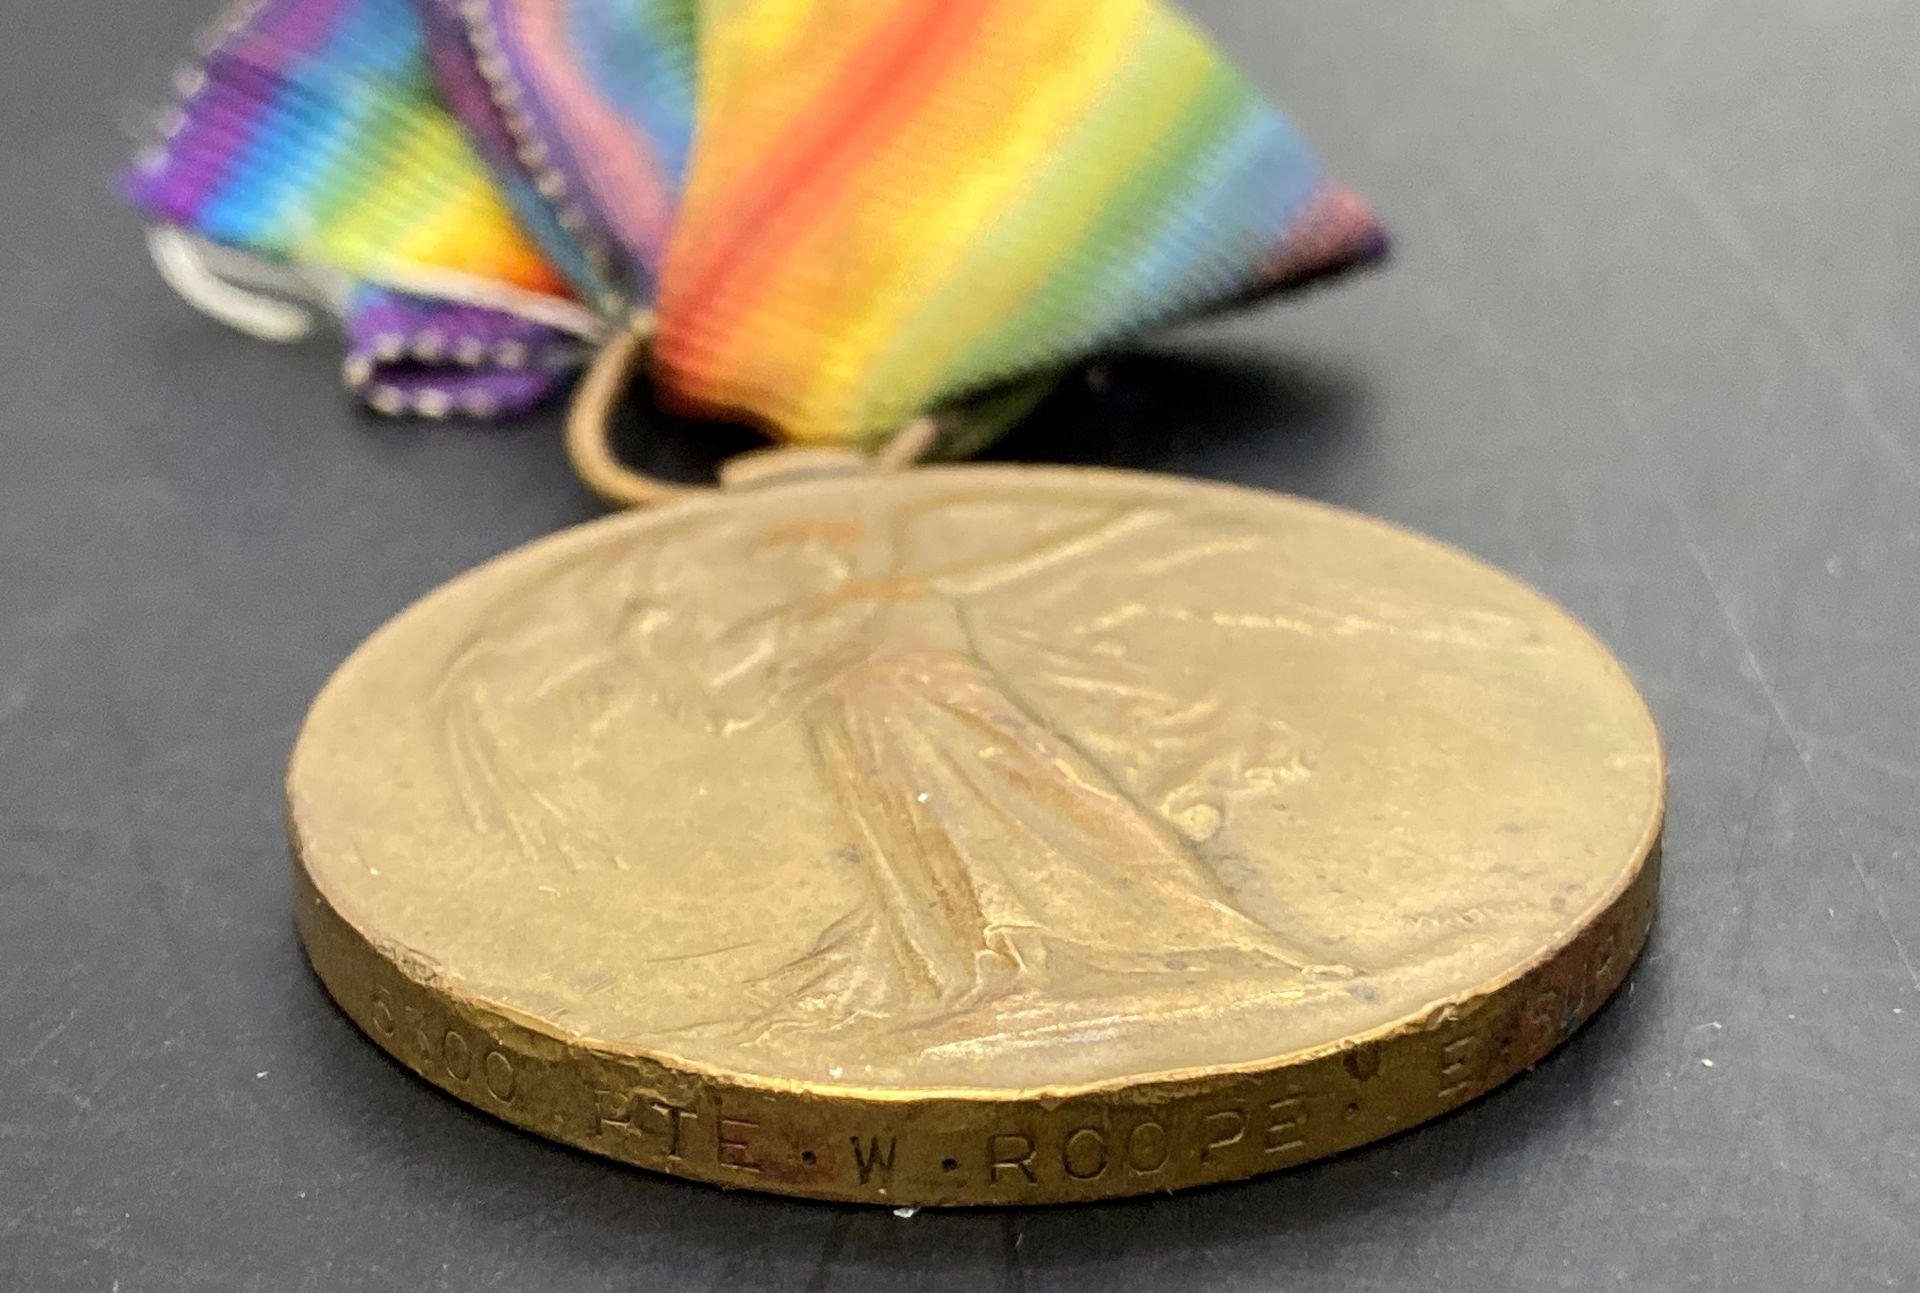 Three First World War medals - 1914-1915 Star, - Image 4 of 5